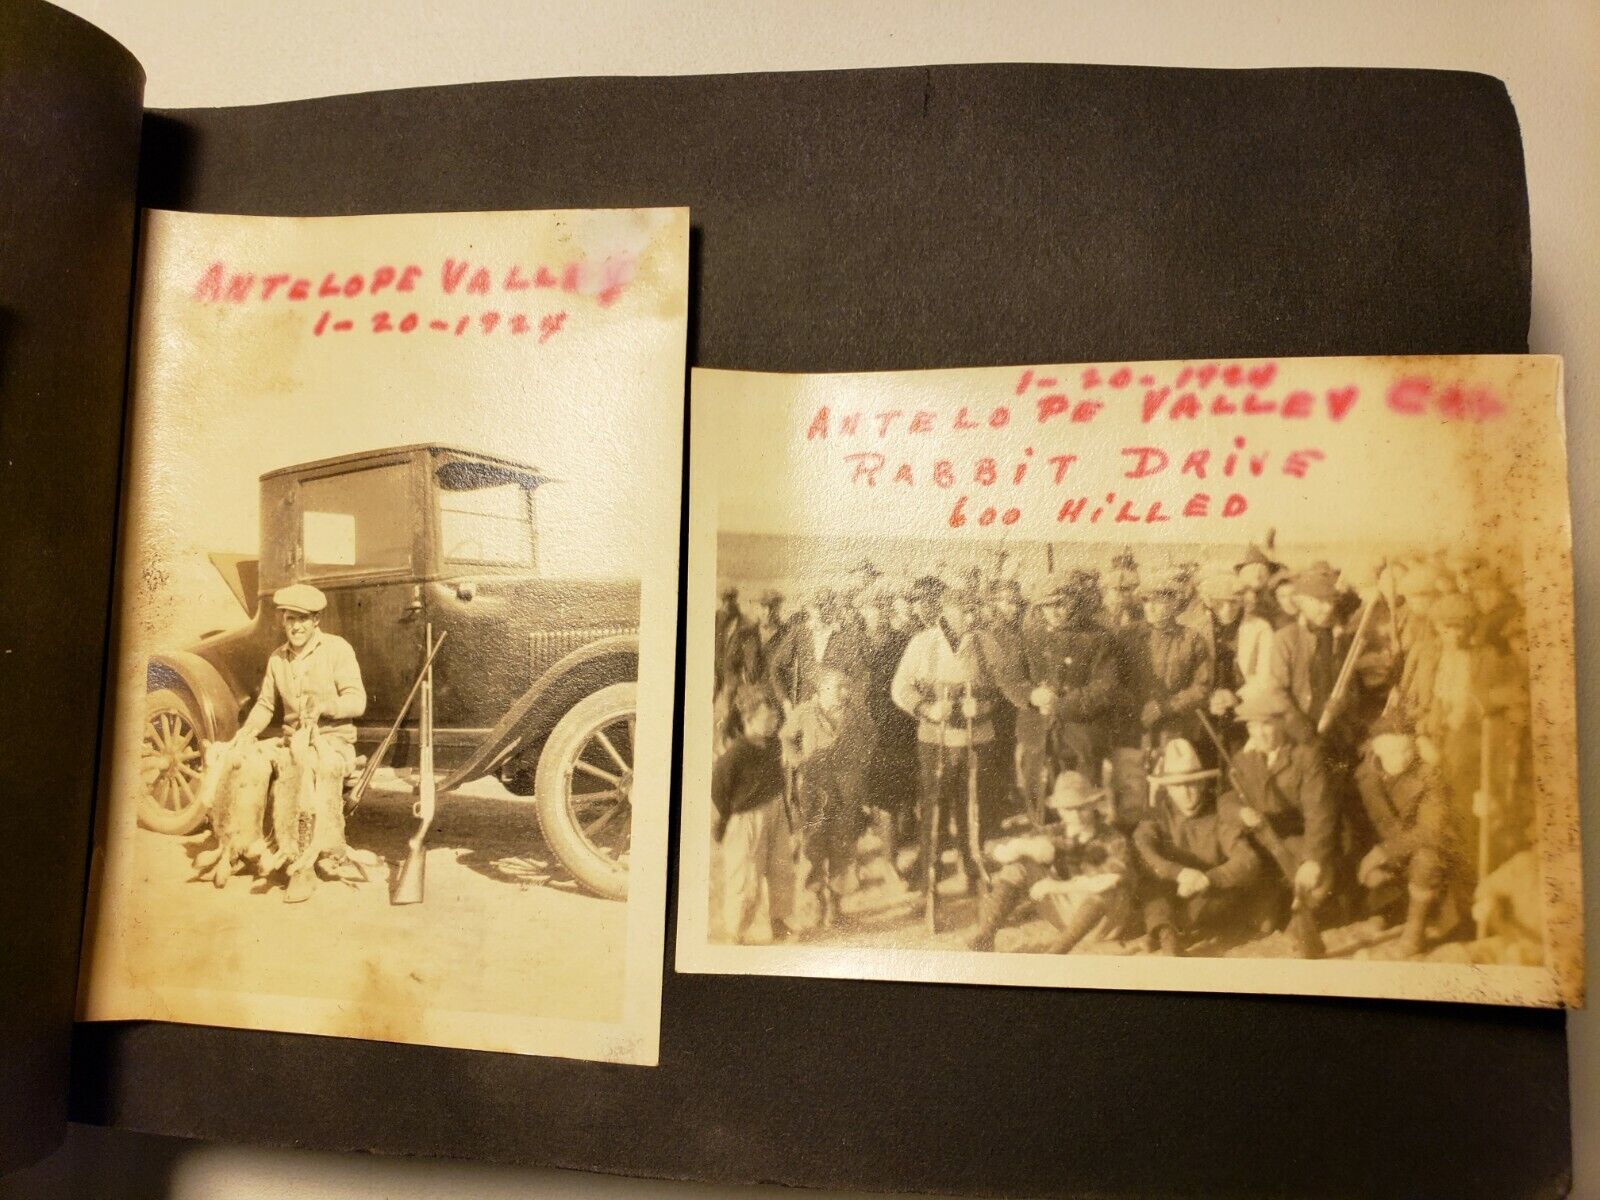 1920's GLENDALE PHOTO ALBUM ROSE PARADE, OUTDOORS, FIRES, RABBIT DRIVE, BEACH